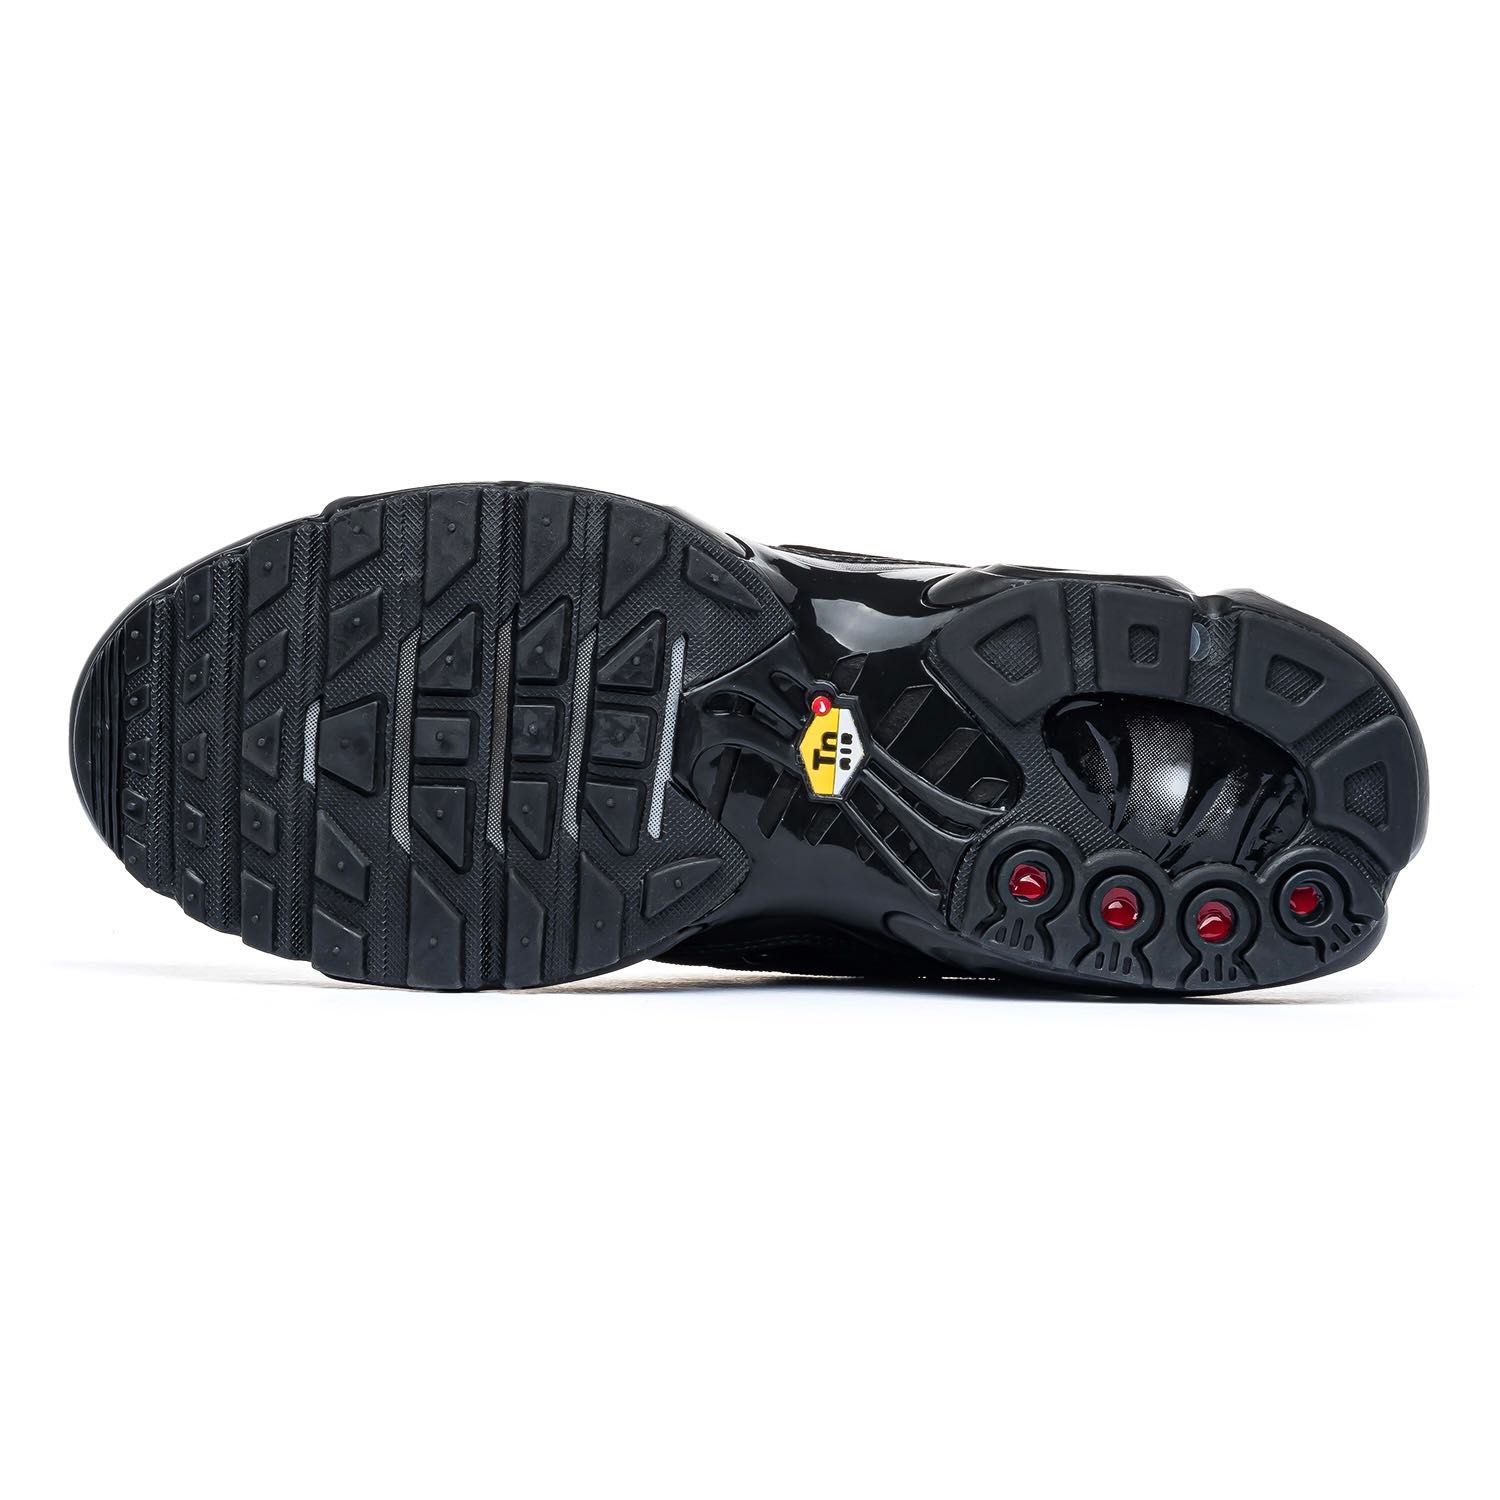 Мужские кроссовки Nike Air Max TN Plus All Black. Размеры 41-45